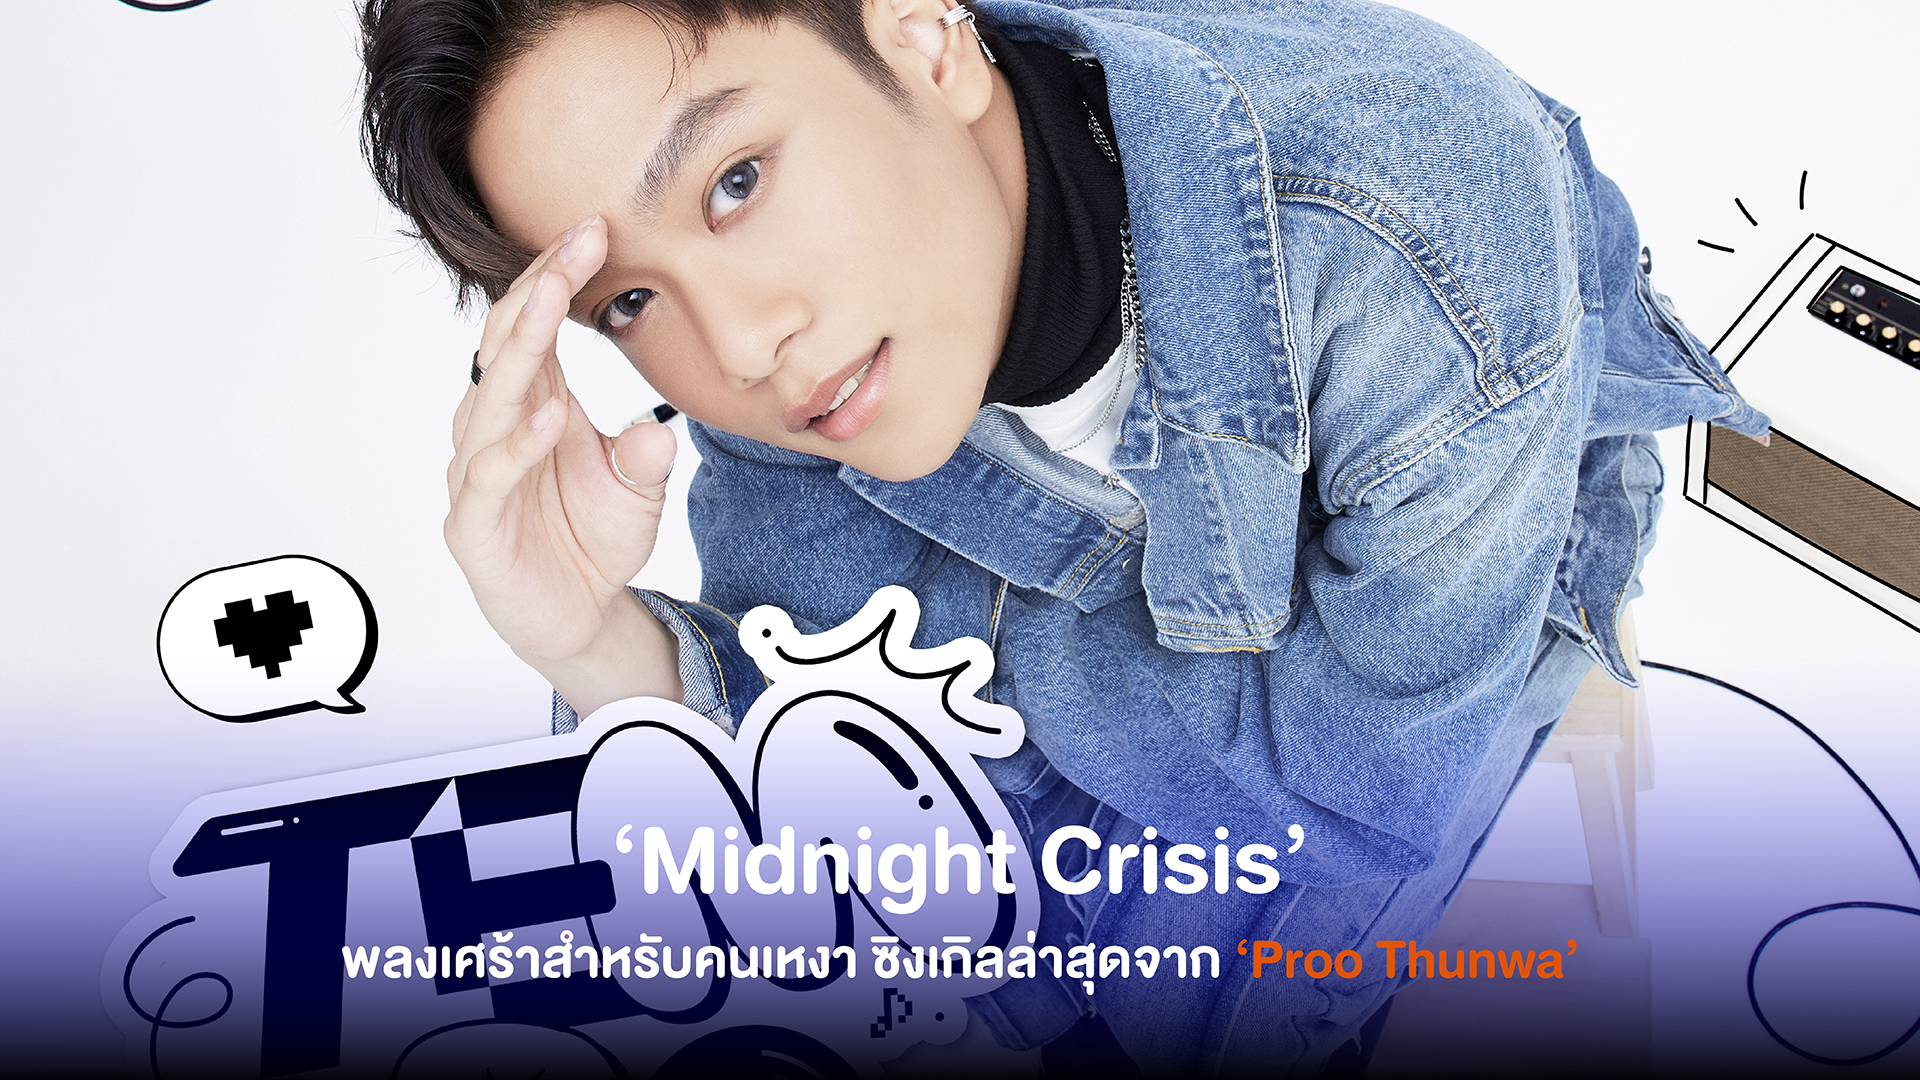 ‘Midnight Crisis’ เพลงเศร้าสำหรับคนเหงา ซิงเกิลล่าสุดของ Proo Thunwa (พรู ธันวา) จากค่าย LIT Entertainment